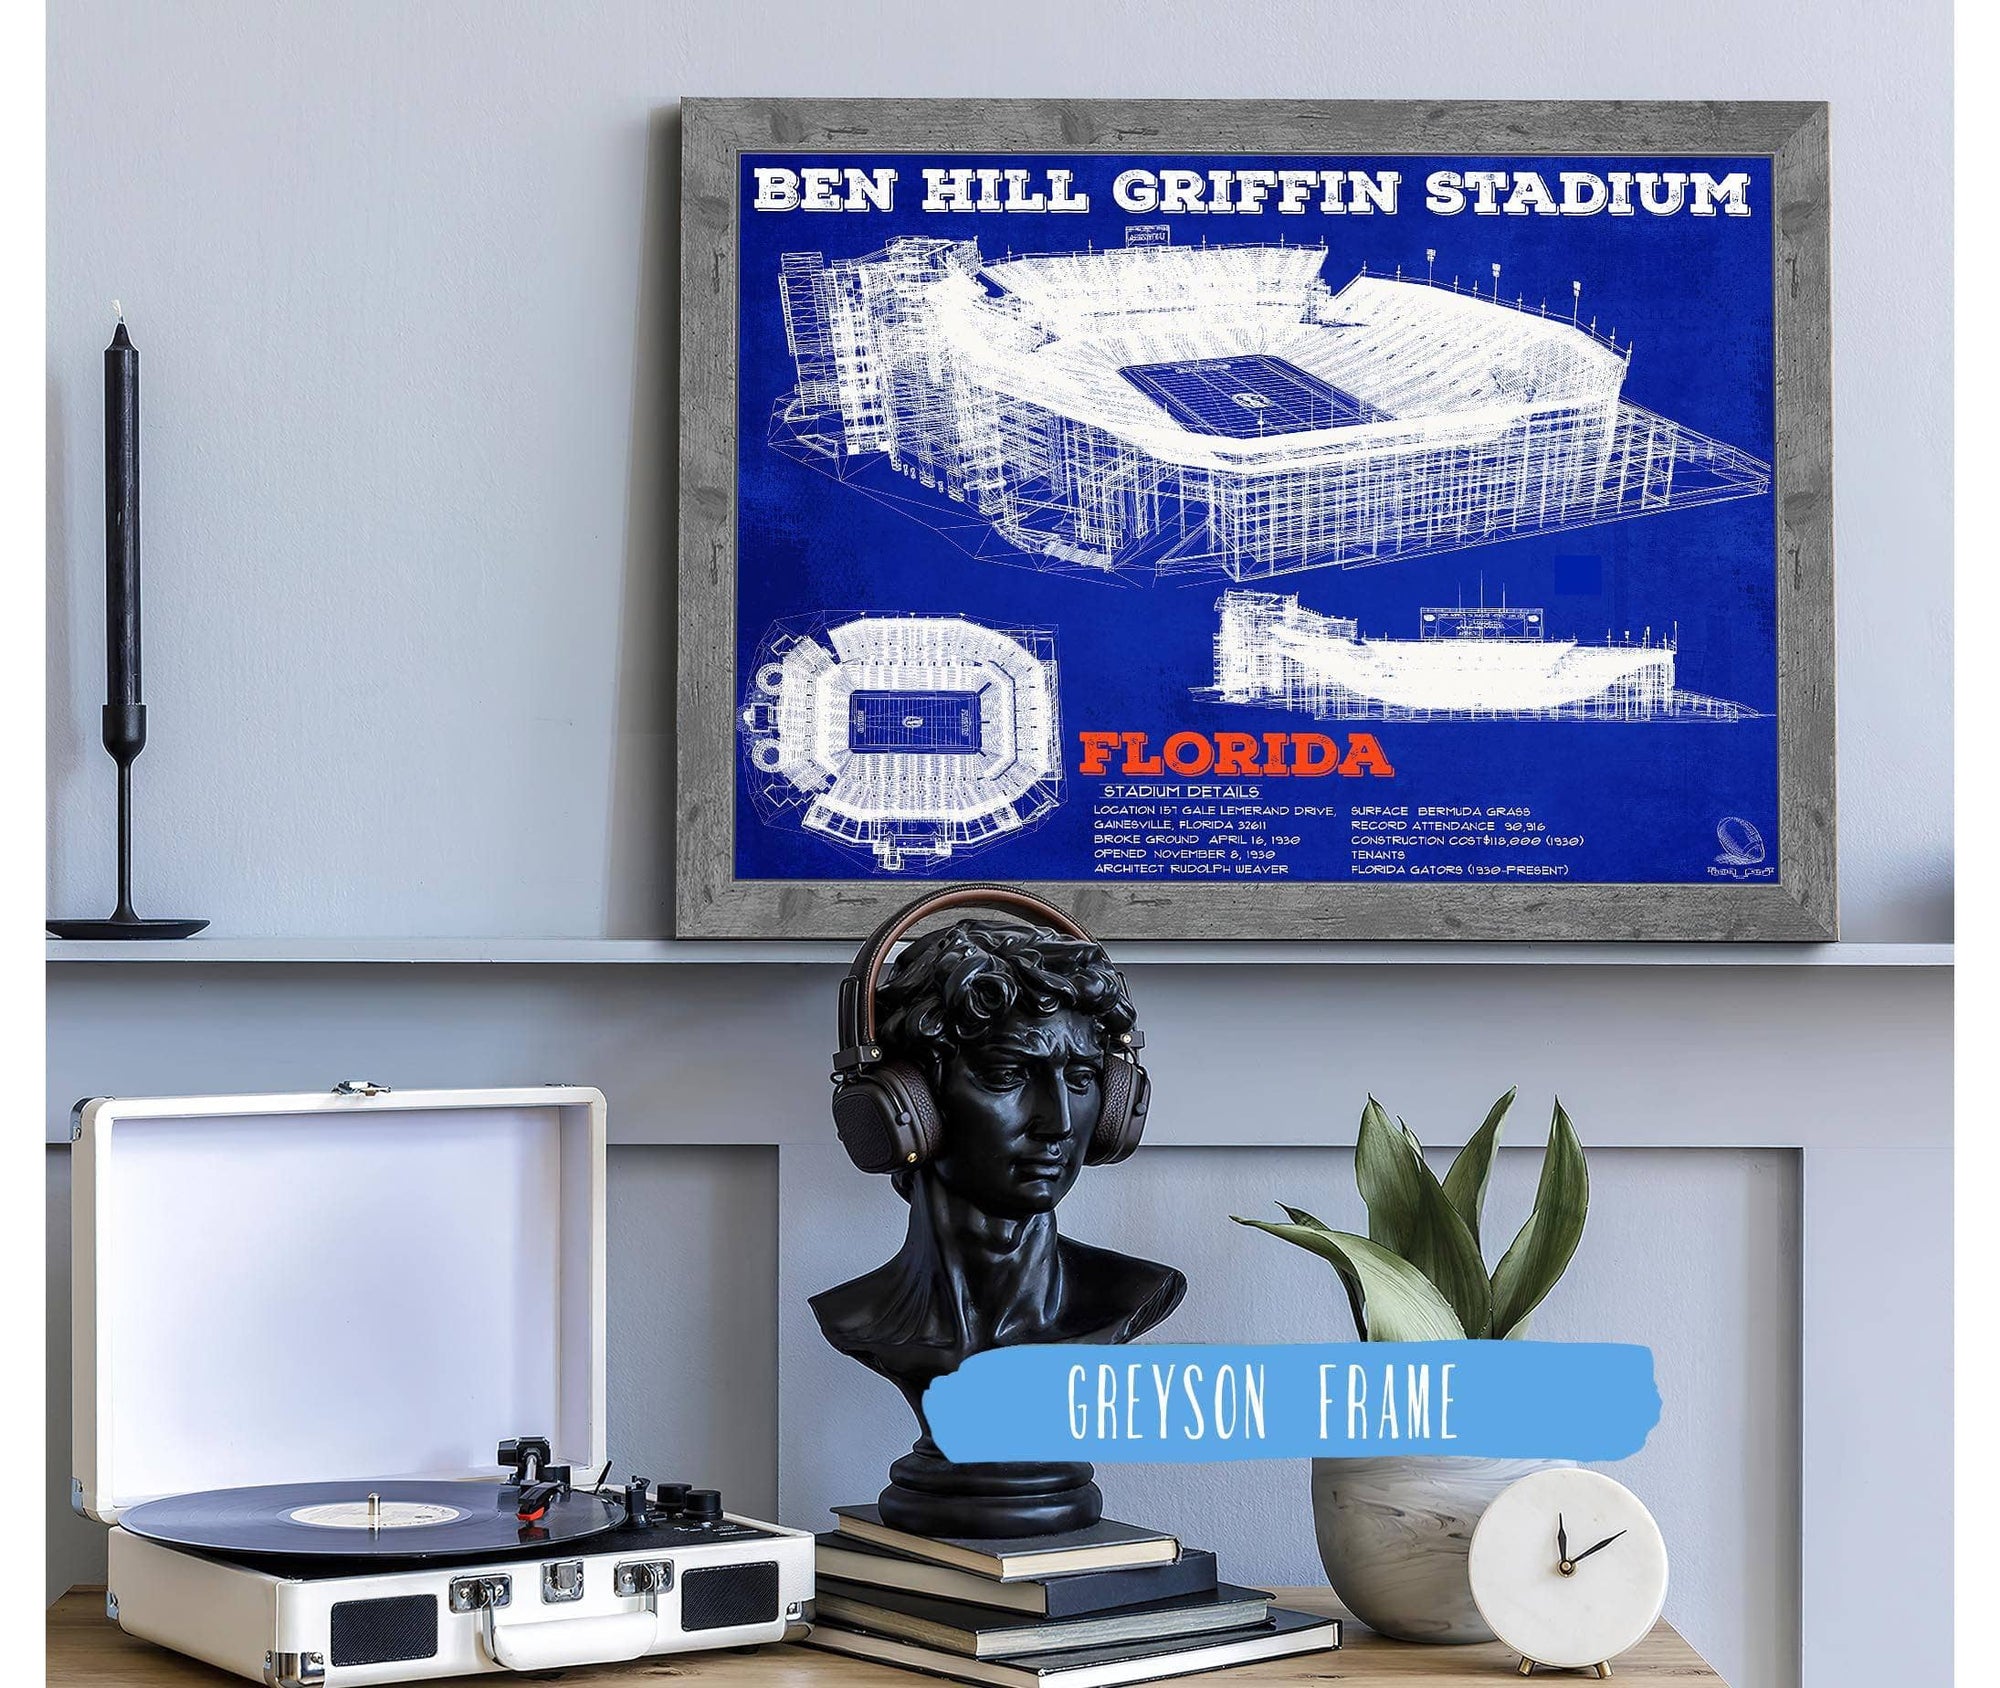 Cutler West Best Selling Collection 14" x 11" / Greyson Frame Ben Hill Griffin Stadium Art - University of Florida Gators Vintage Stadium & Blueprint Art Print 639922002-TOP_60096